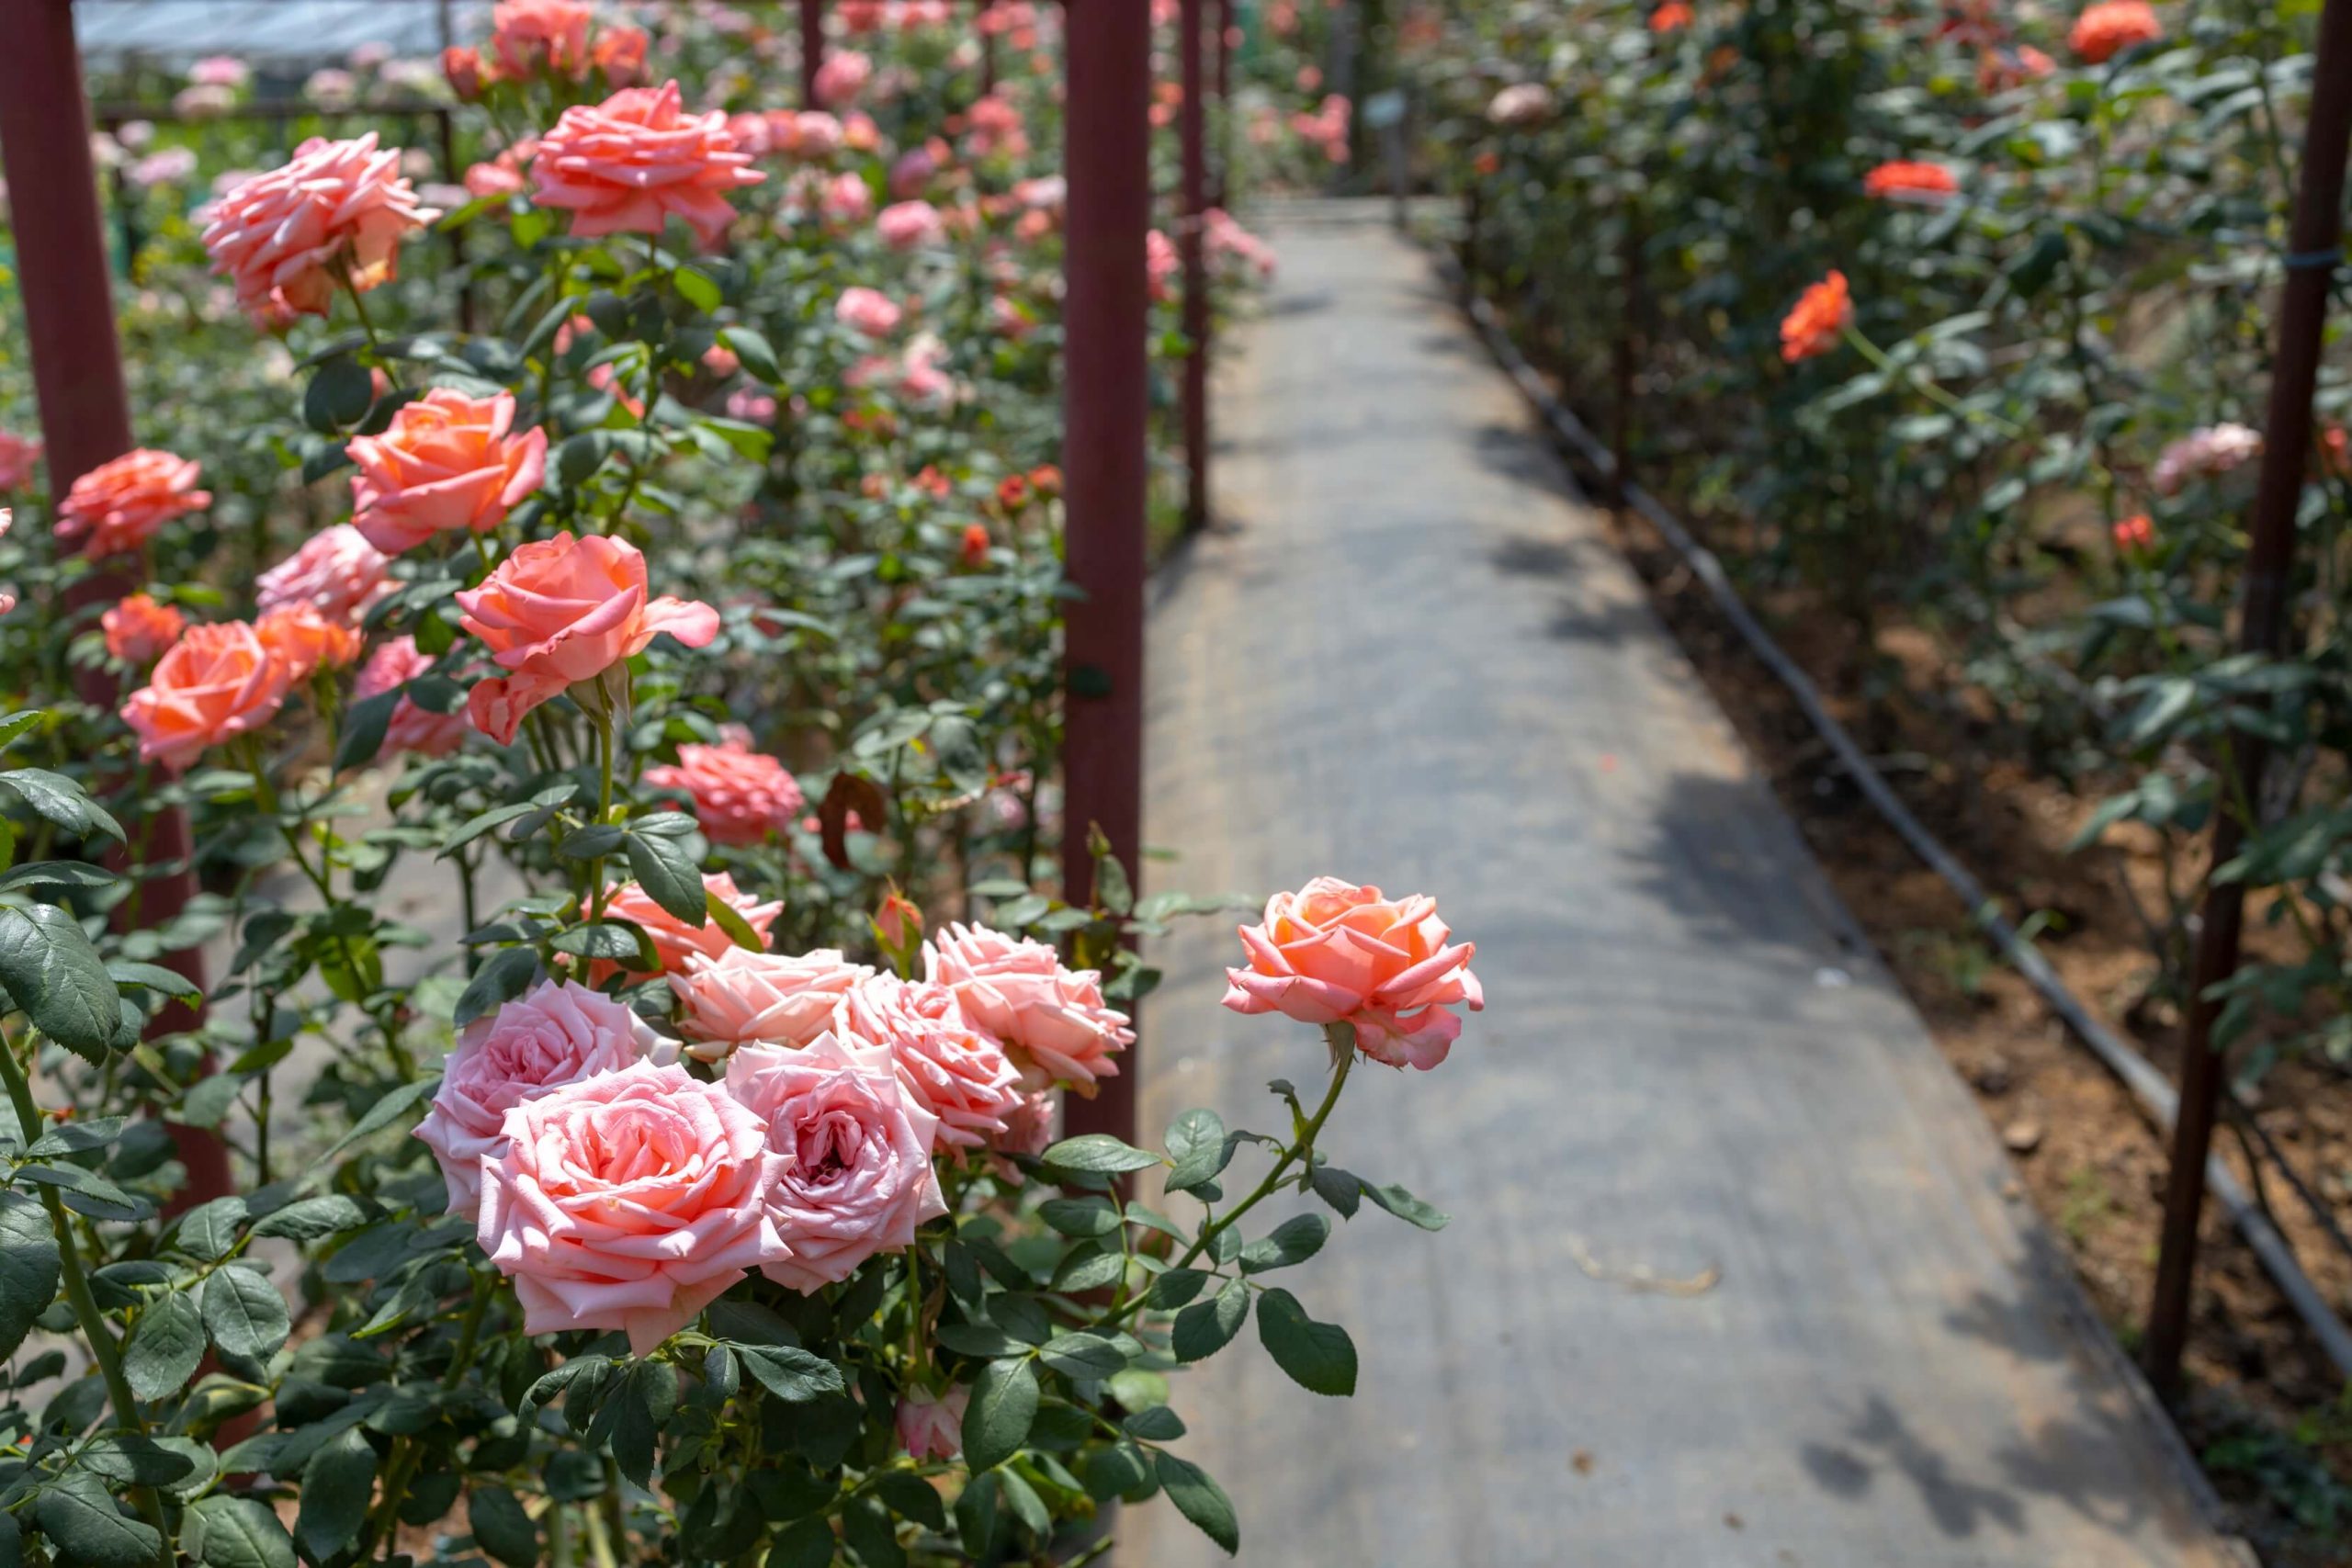 A photo of a rose bush